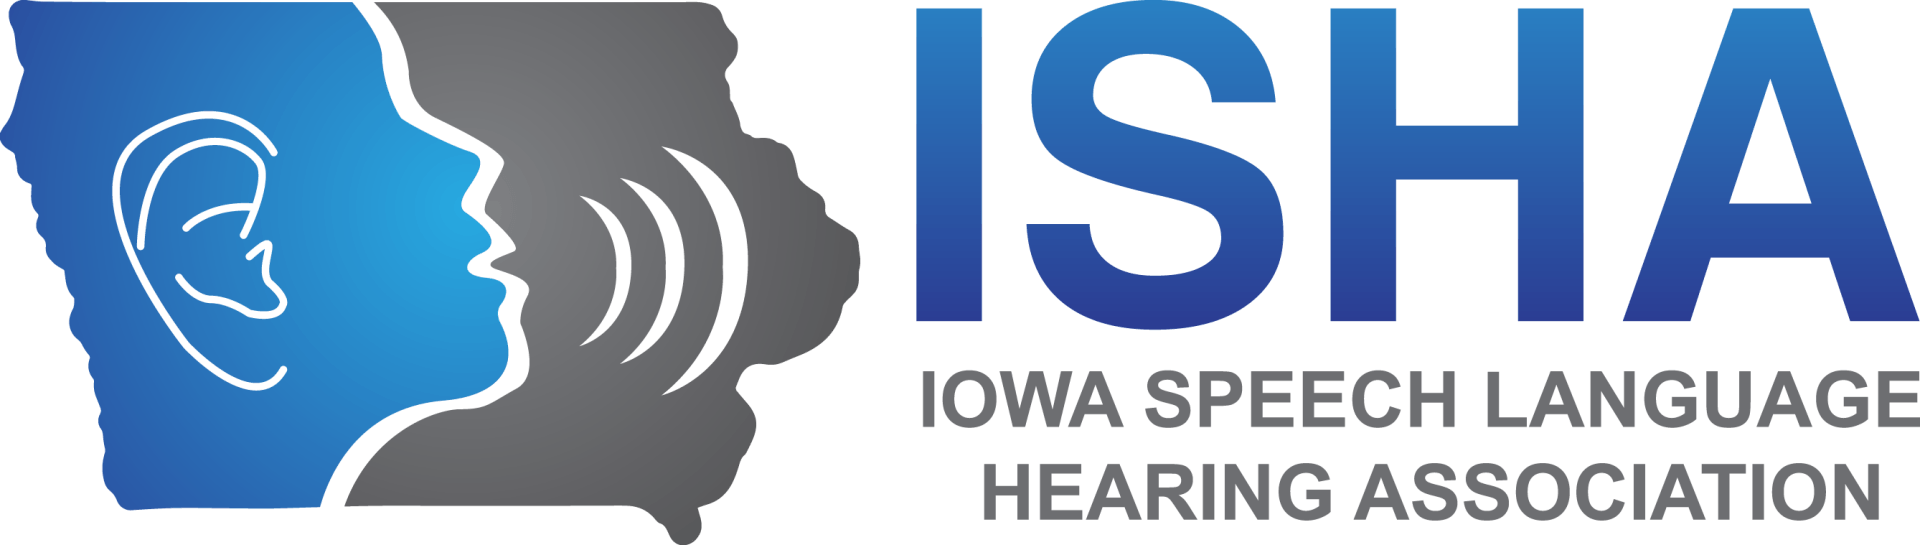 Iowa Speech Language Hearing Association